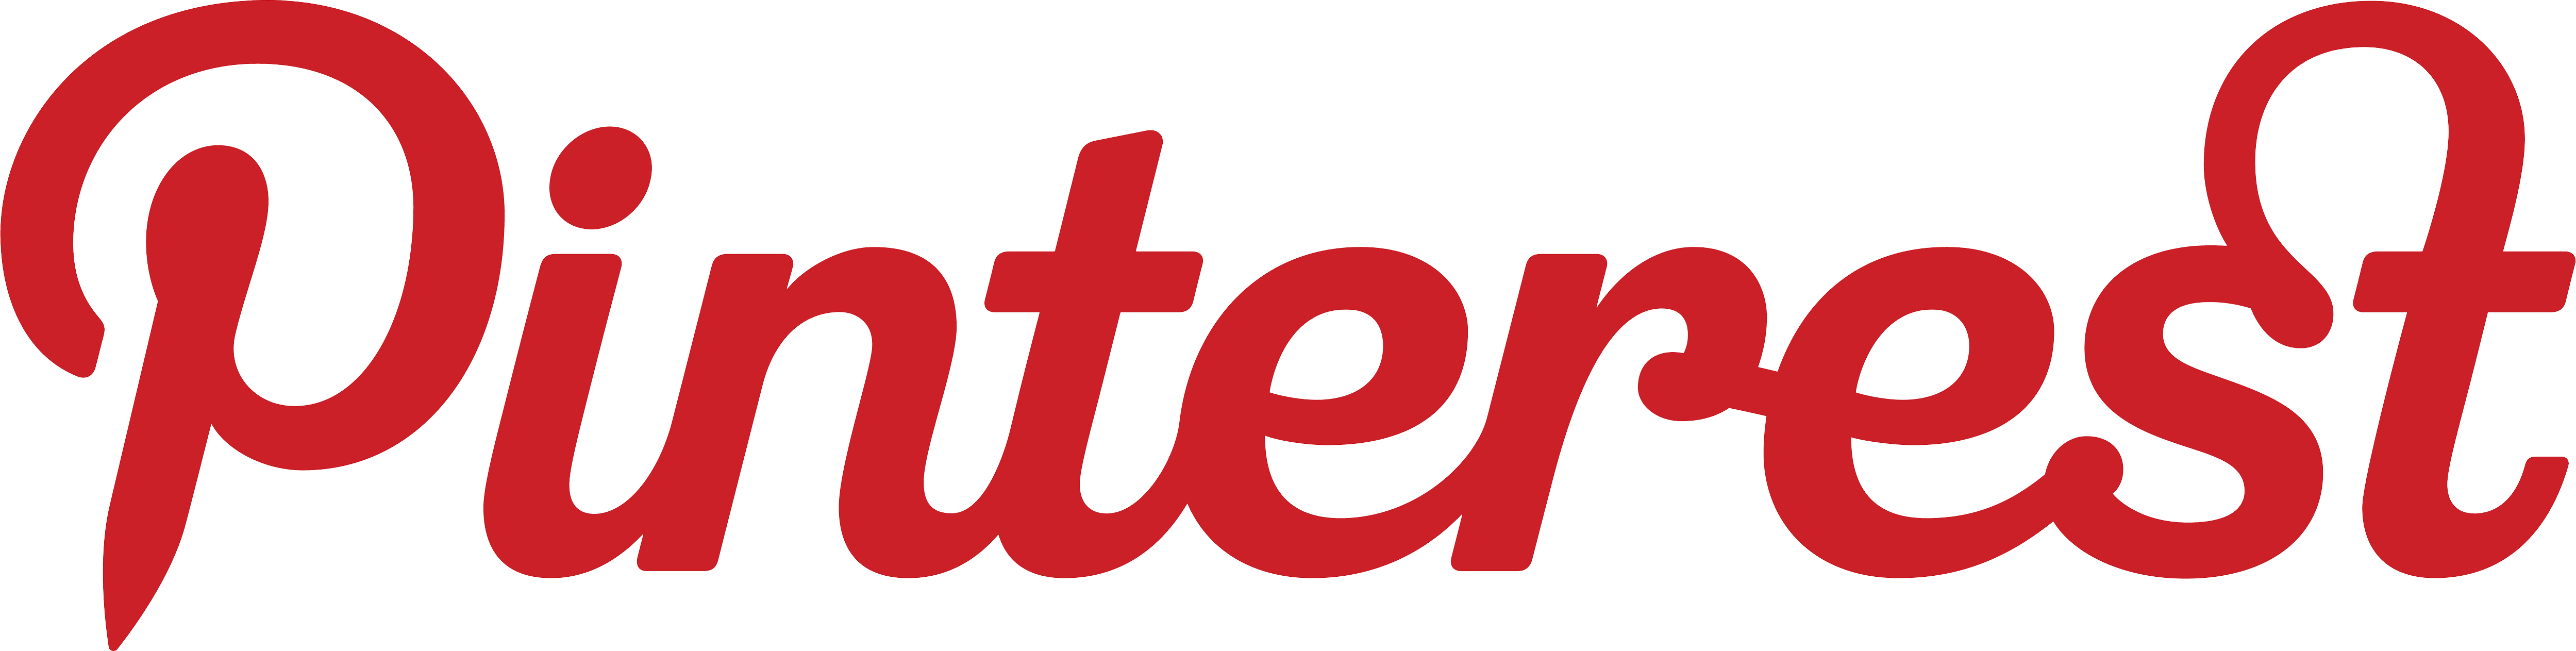 Ooget com. Логотип.